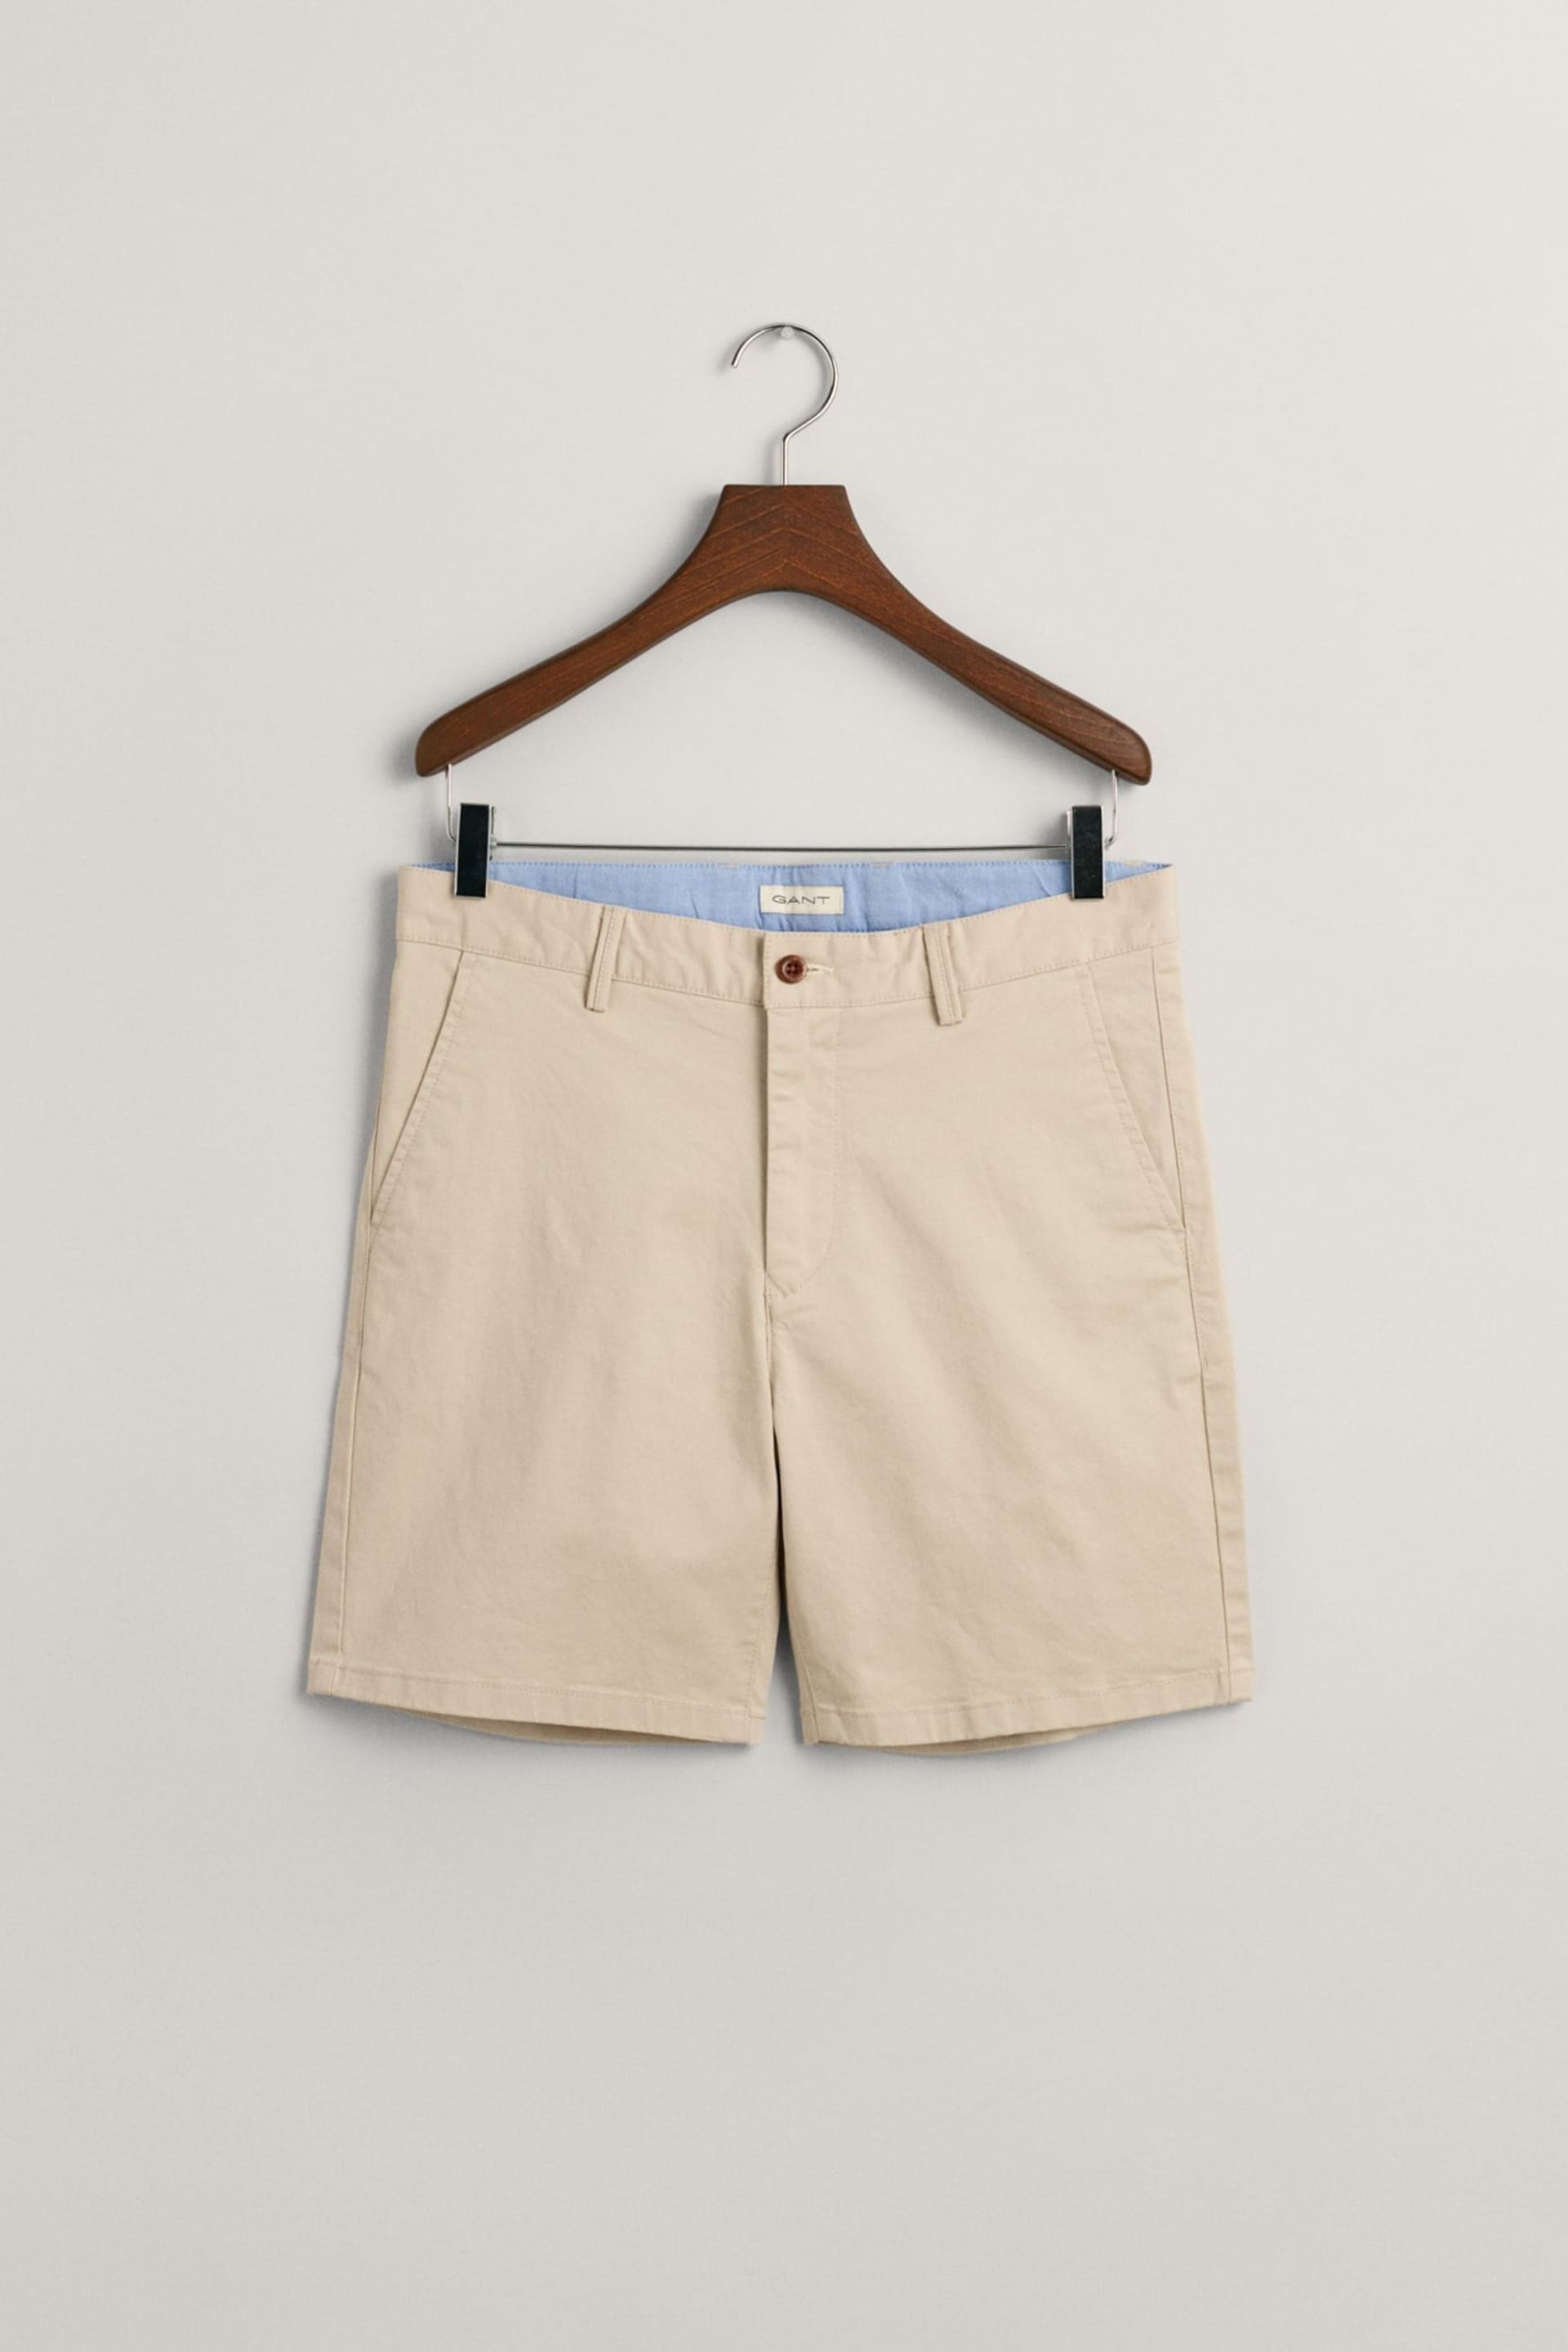 GANT Teen Boys Chino Shorts - Image 1 of 3